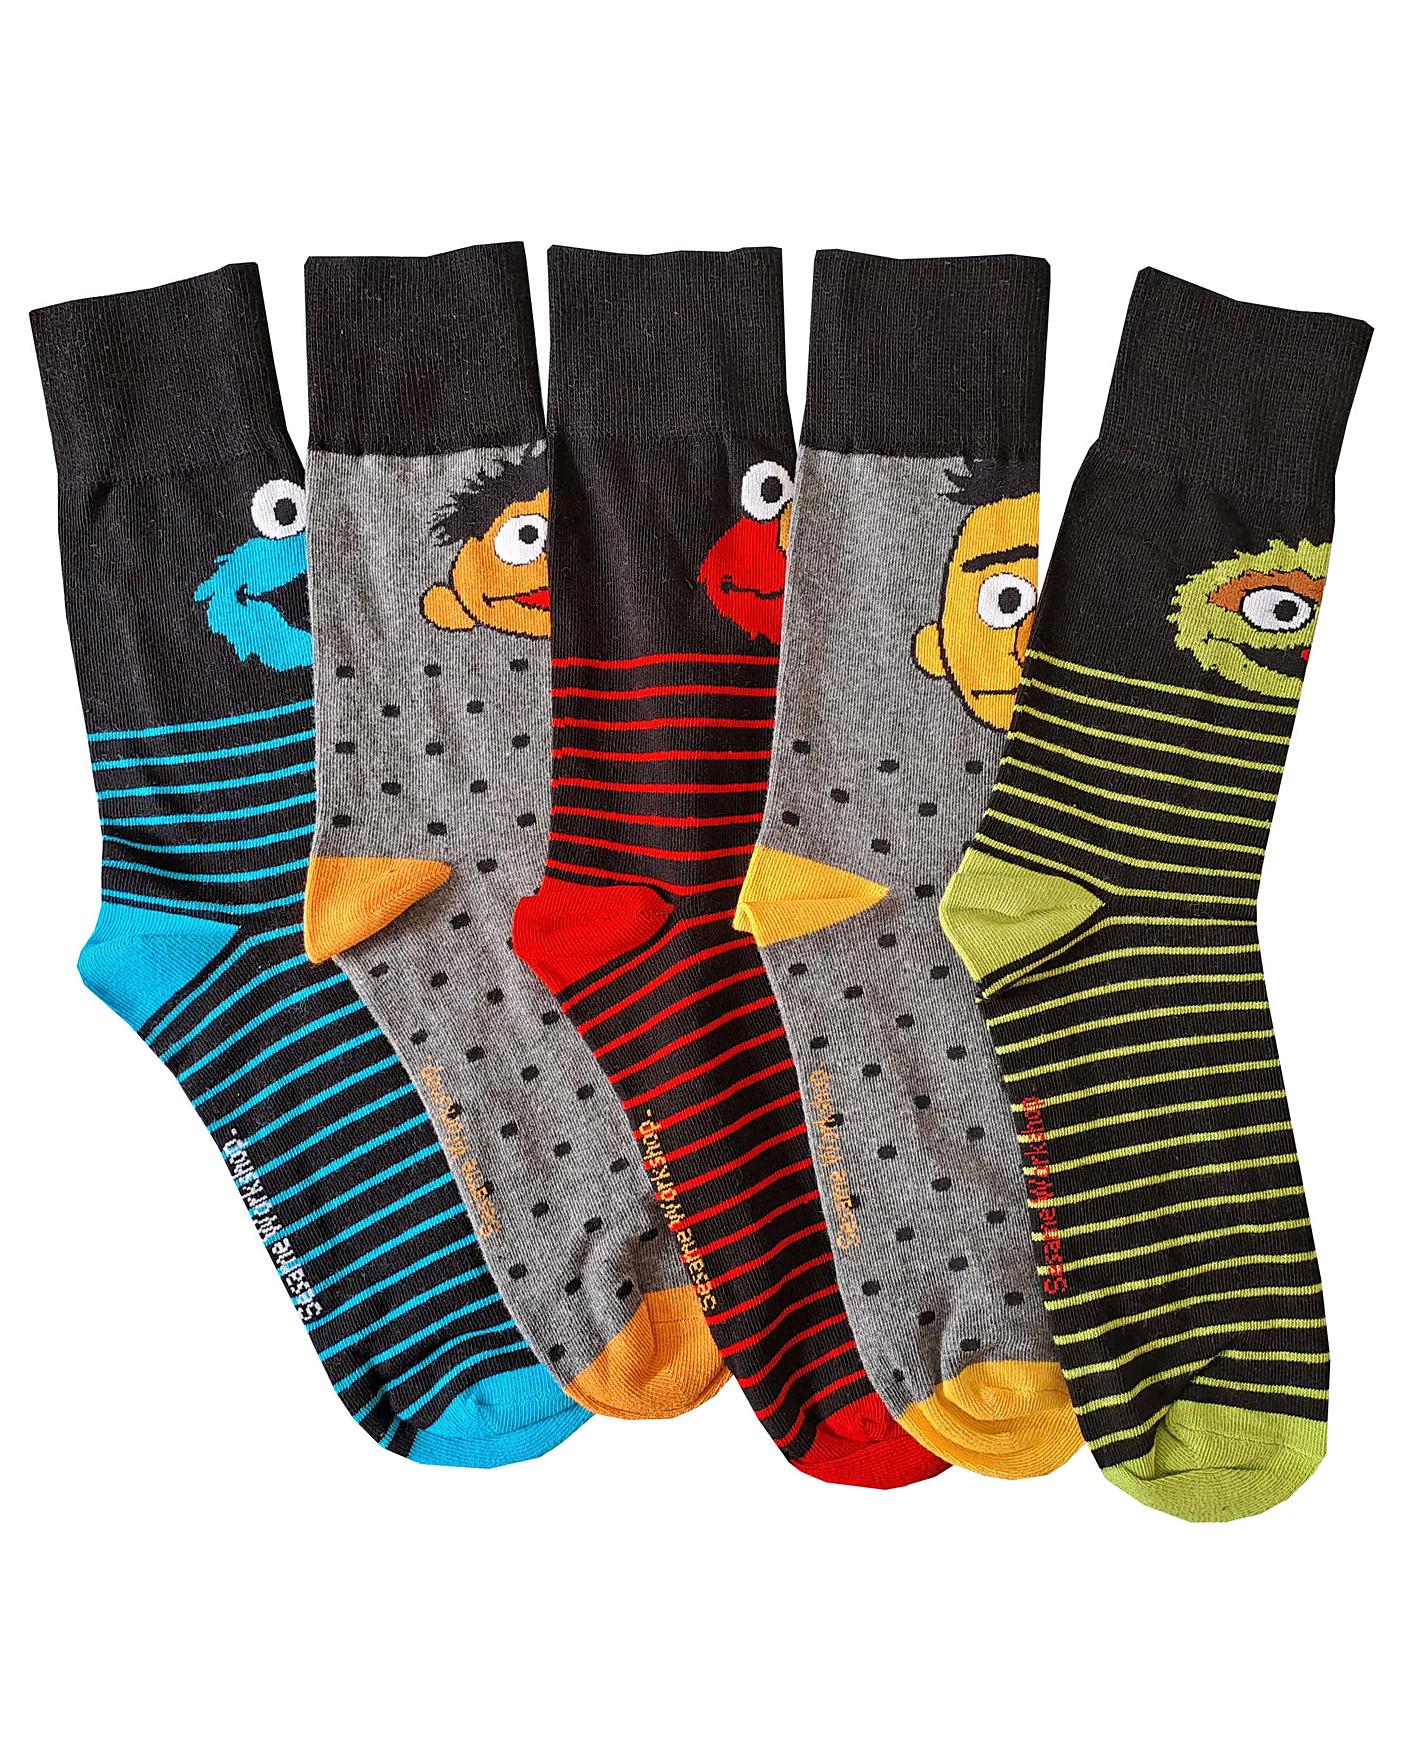 Shop for Sesame Street, Underwear & Socks, Gifts for Him